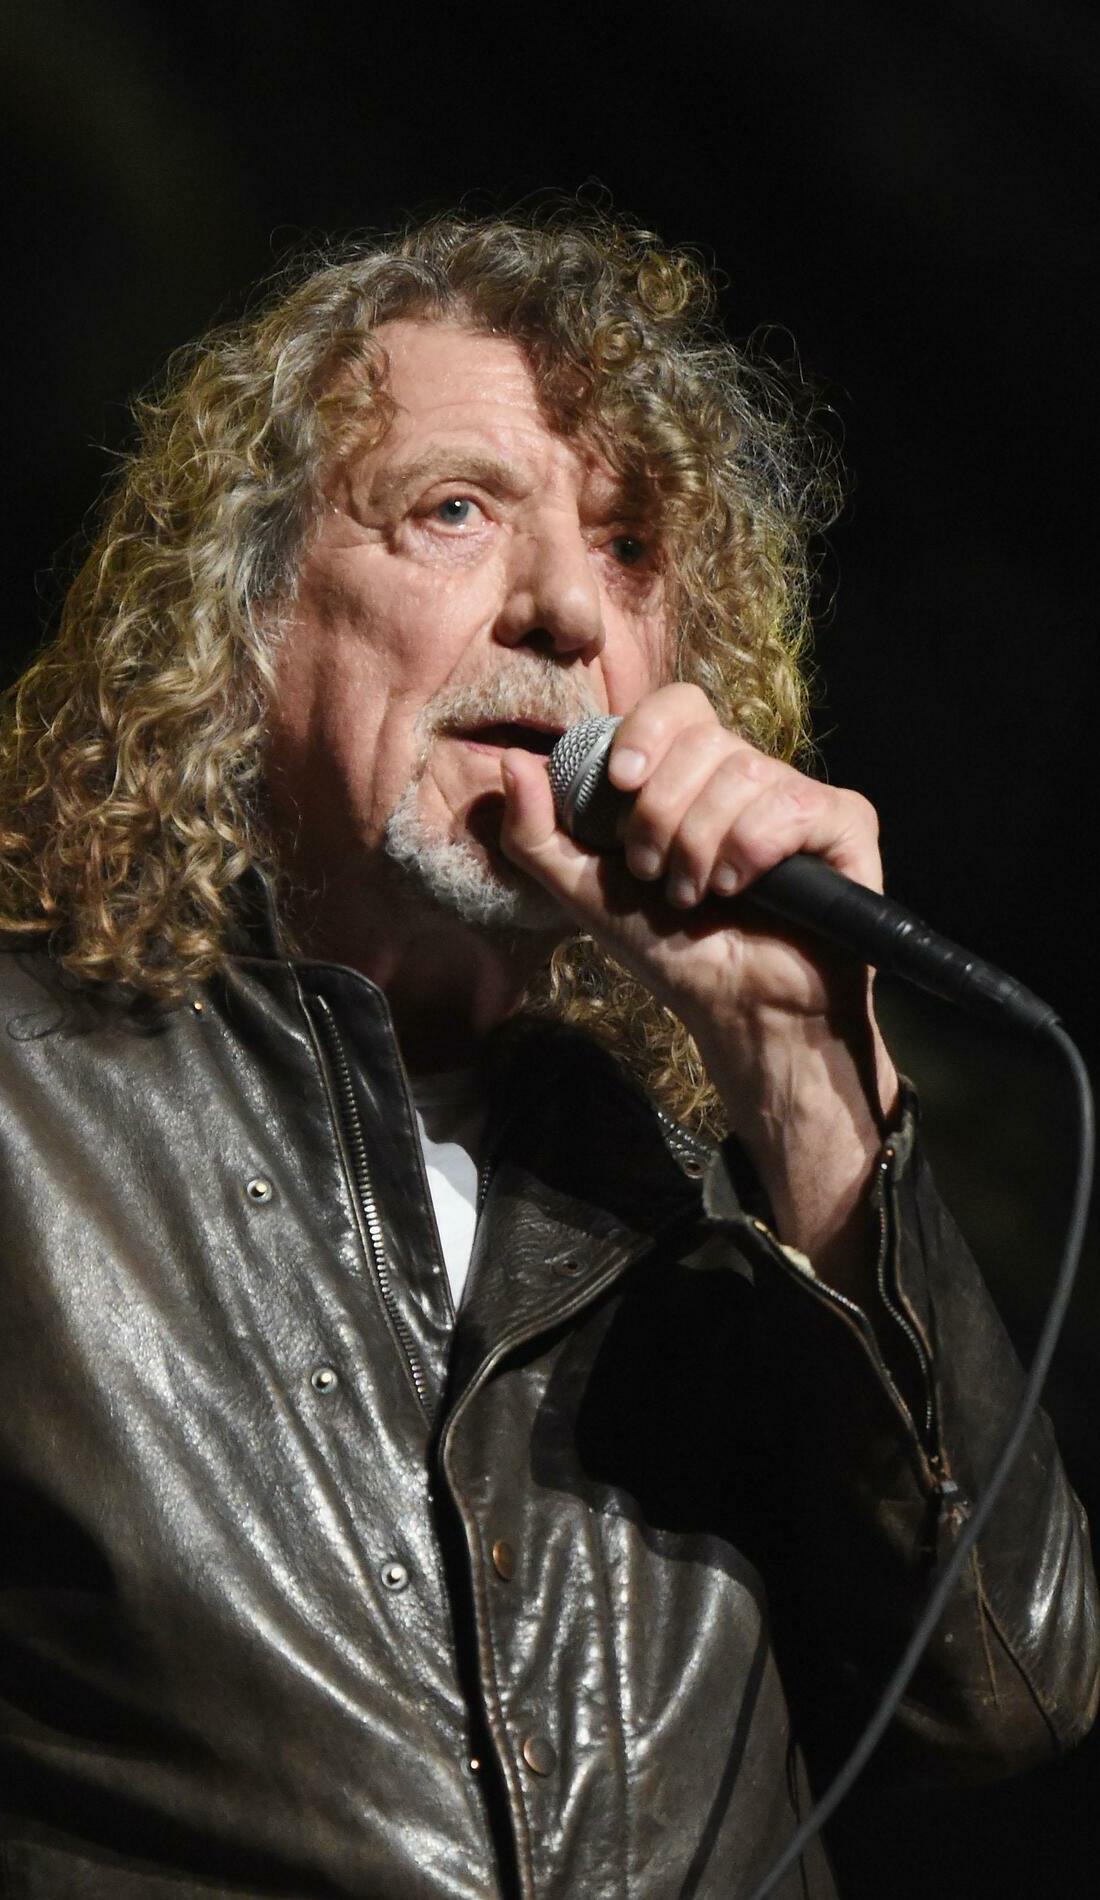 A Robert Plant live event